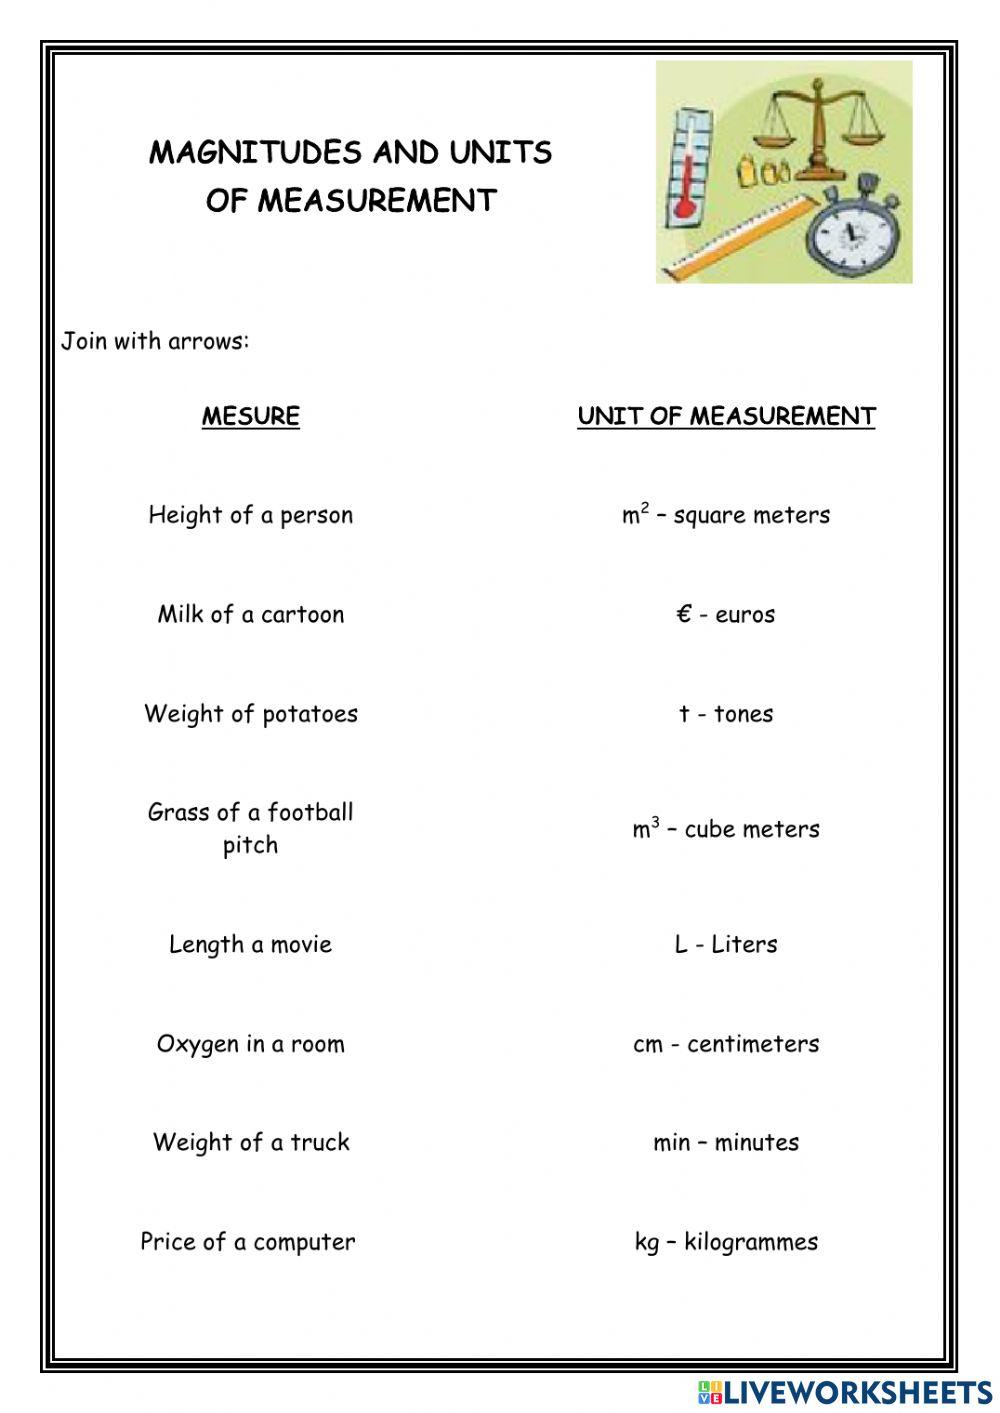 Magnitudes and Units of Measurement